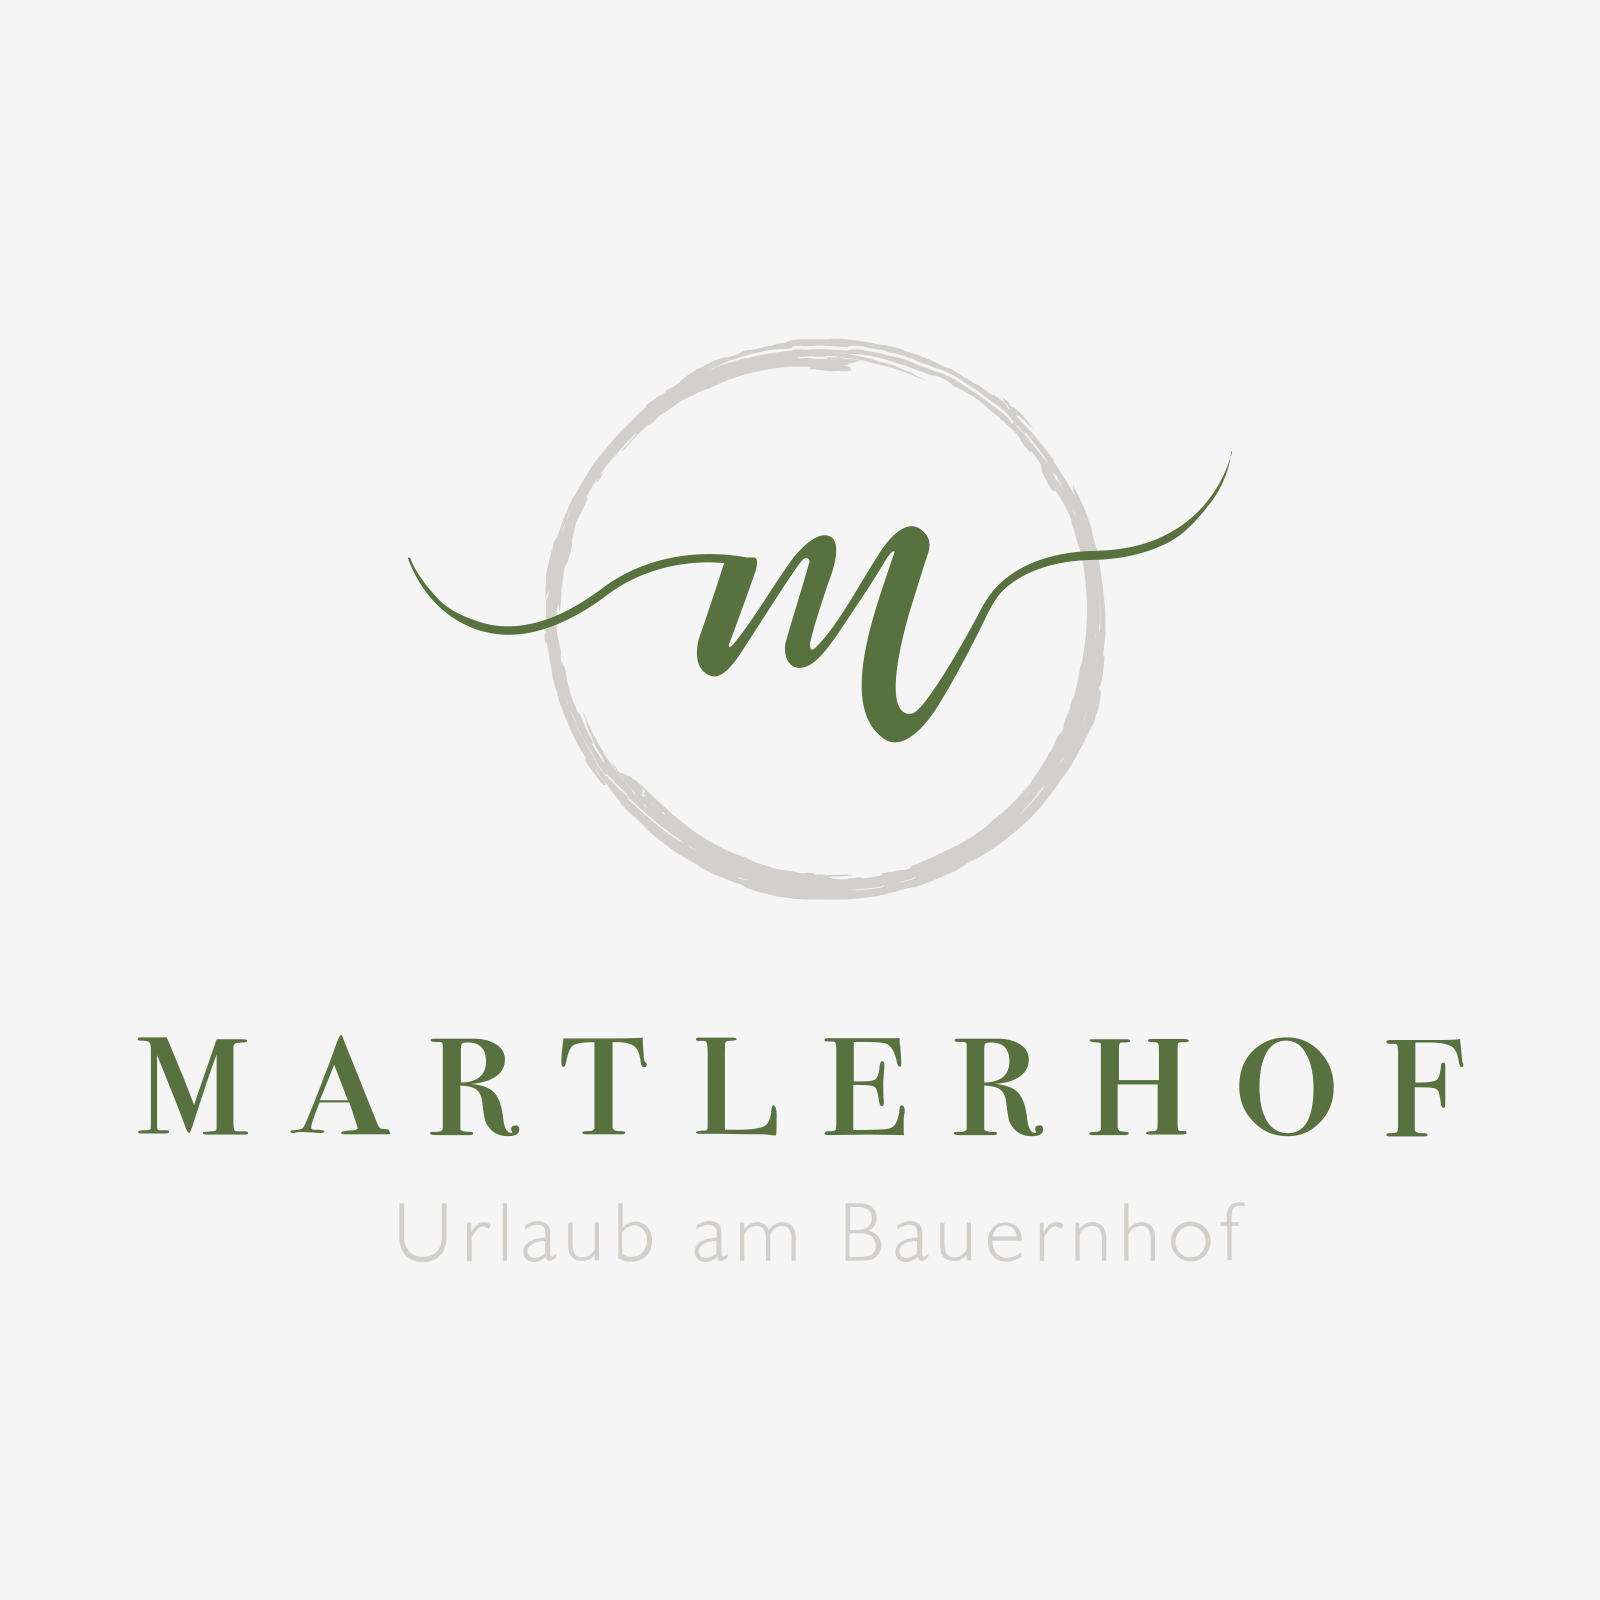 (c) Martlerhof.at